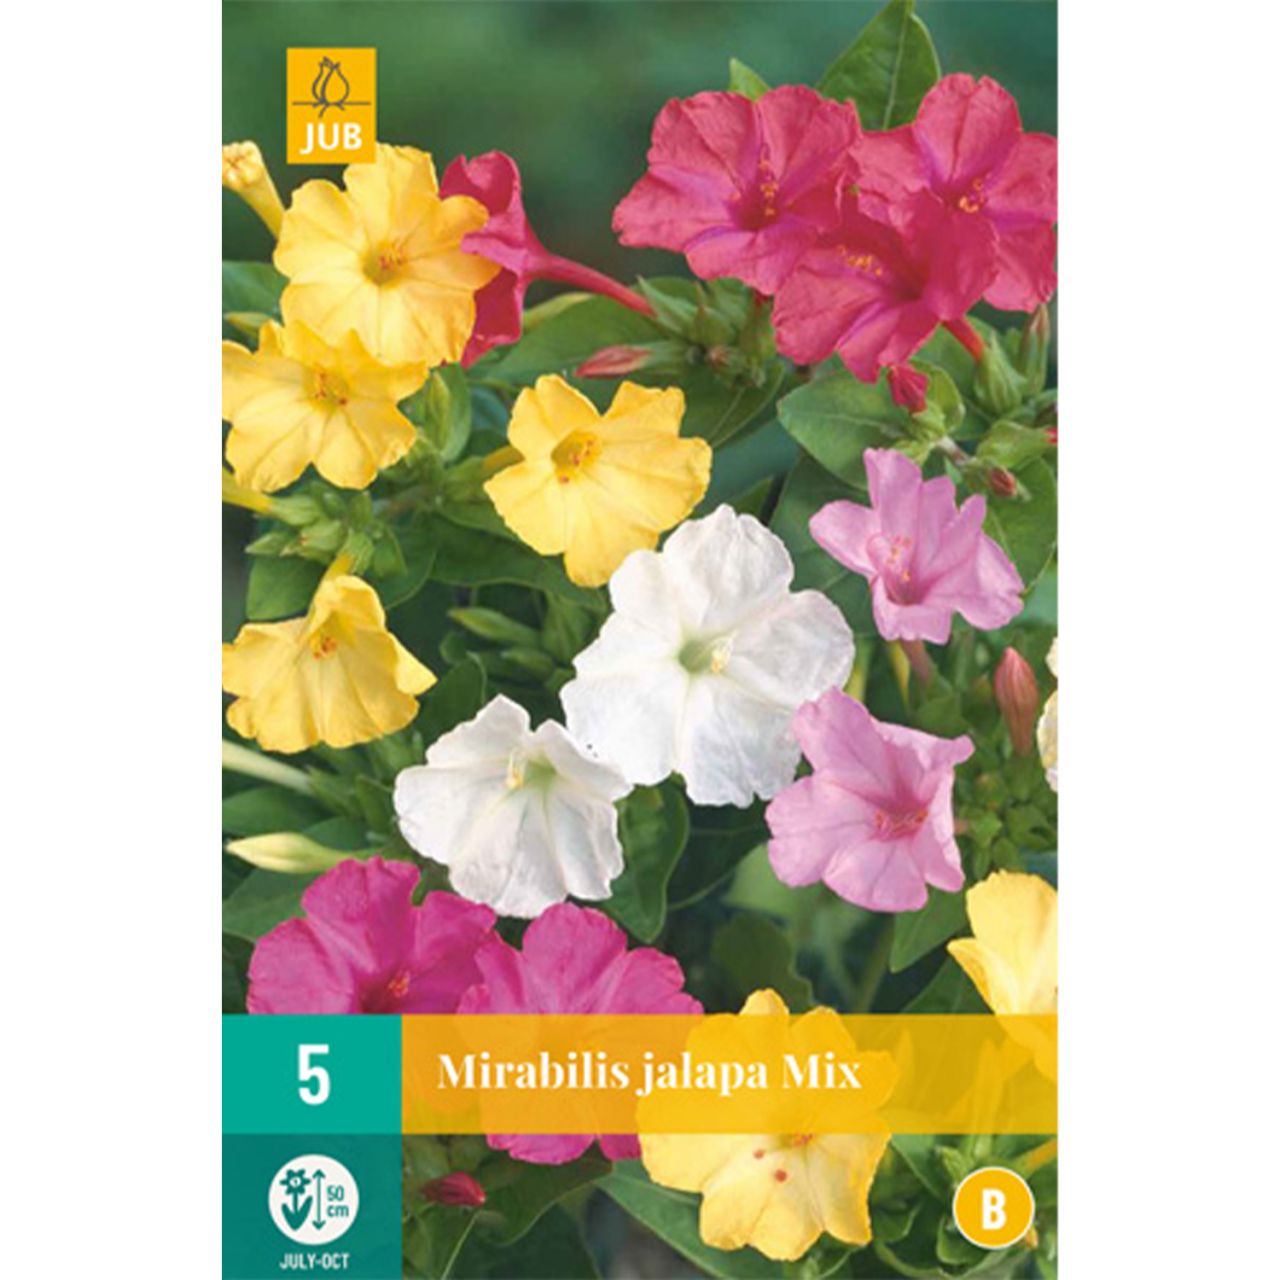 Kategorie <b>Frühlings-Blumenzwiebeln </b> - Wunderblumen - 5 Stück - Mirabilis Jalapa